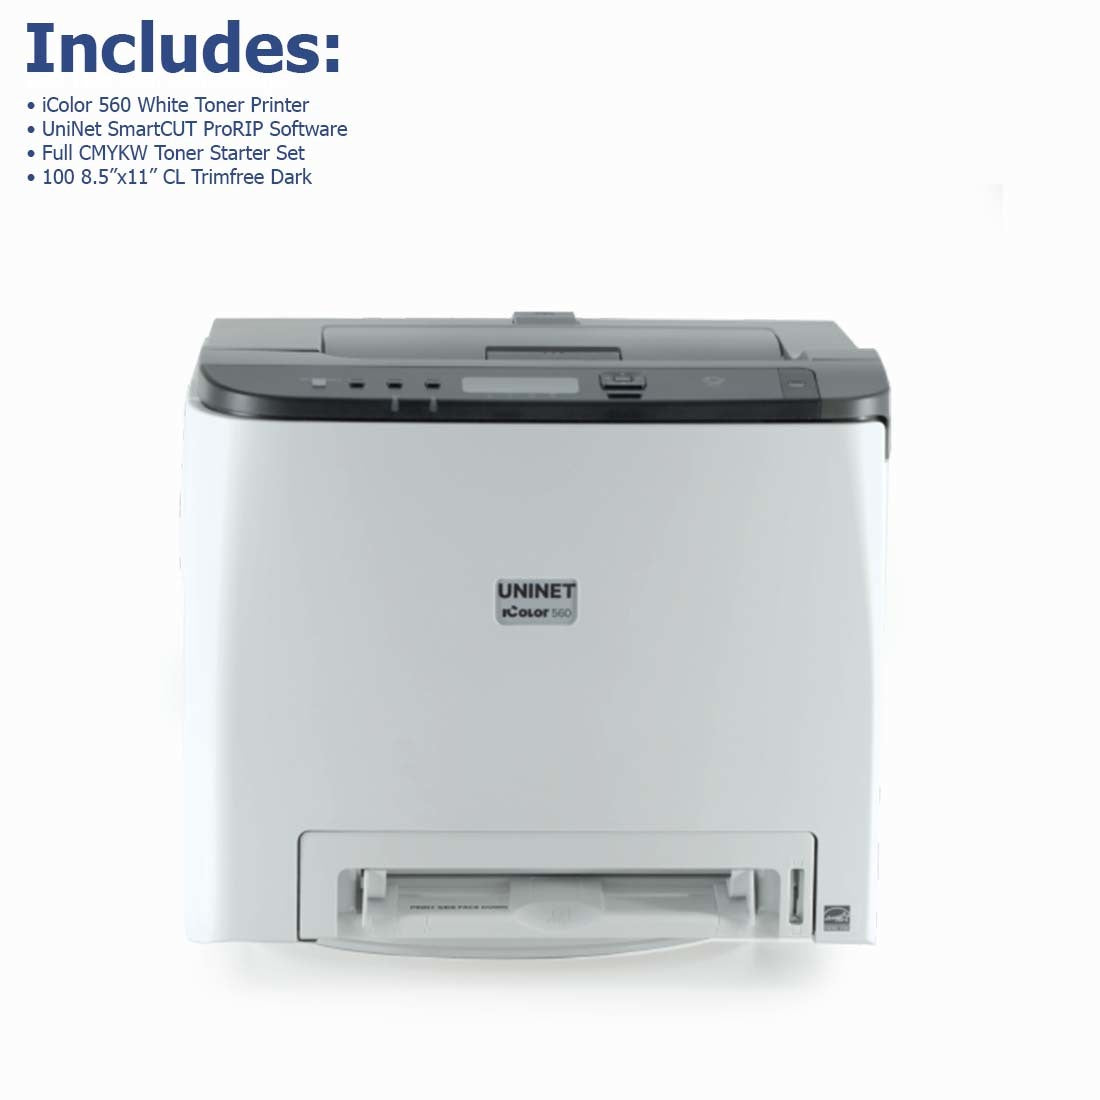 iColor 560 White Toner Printer - Joto Imaging Supplies Canada